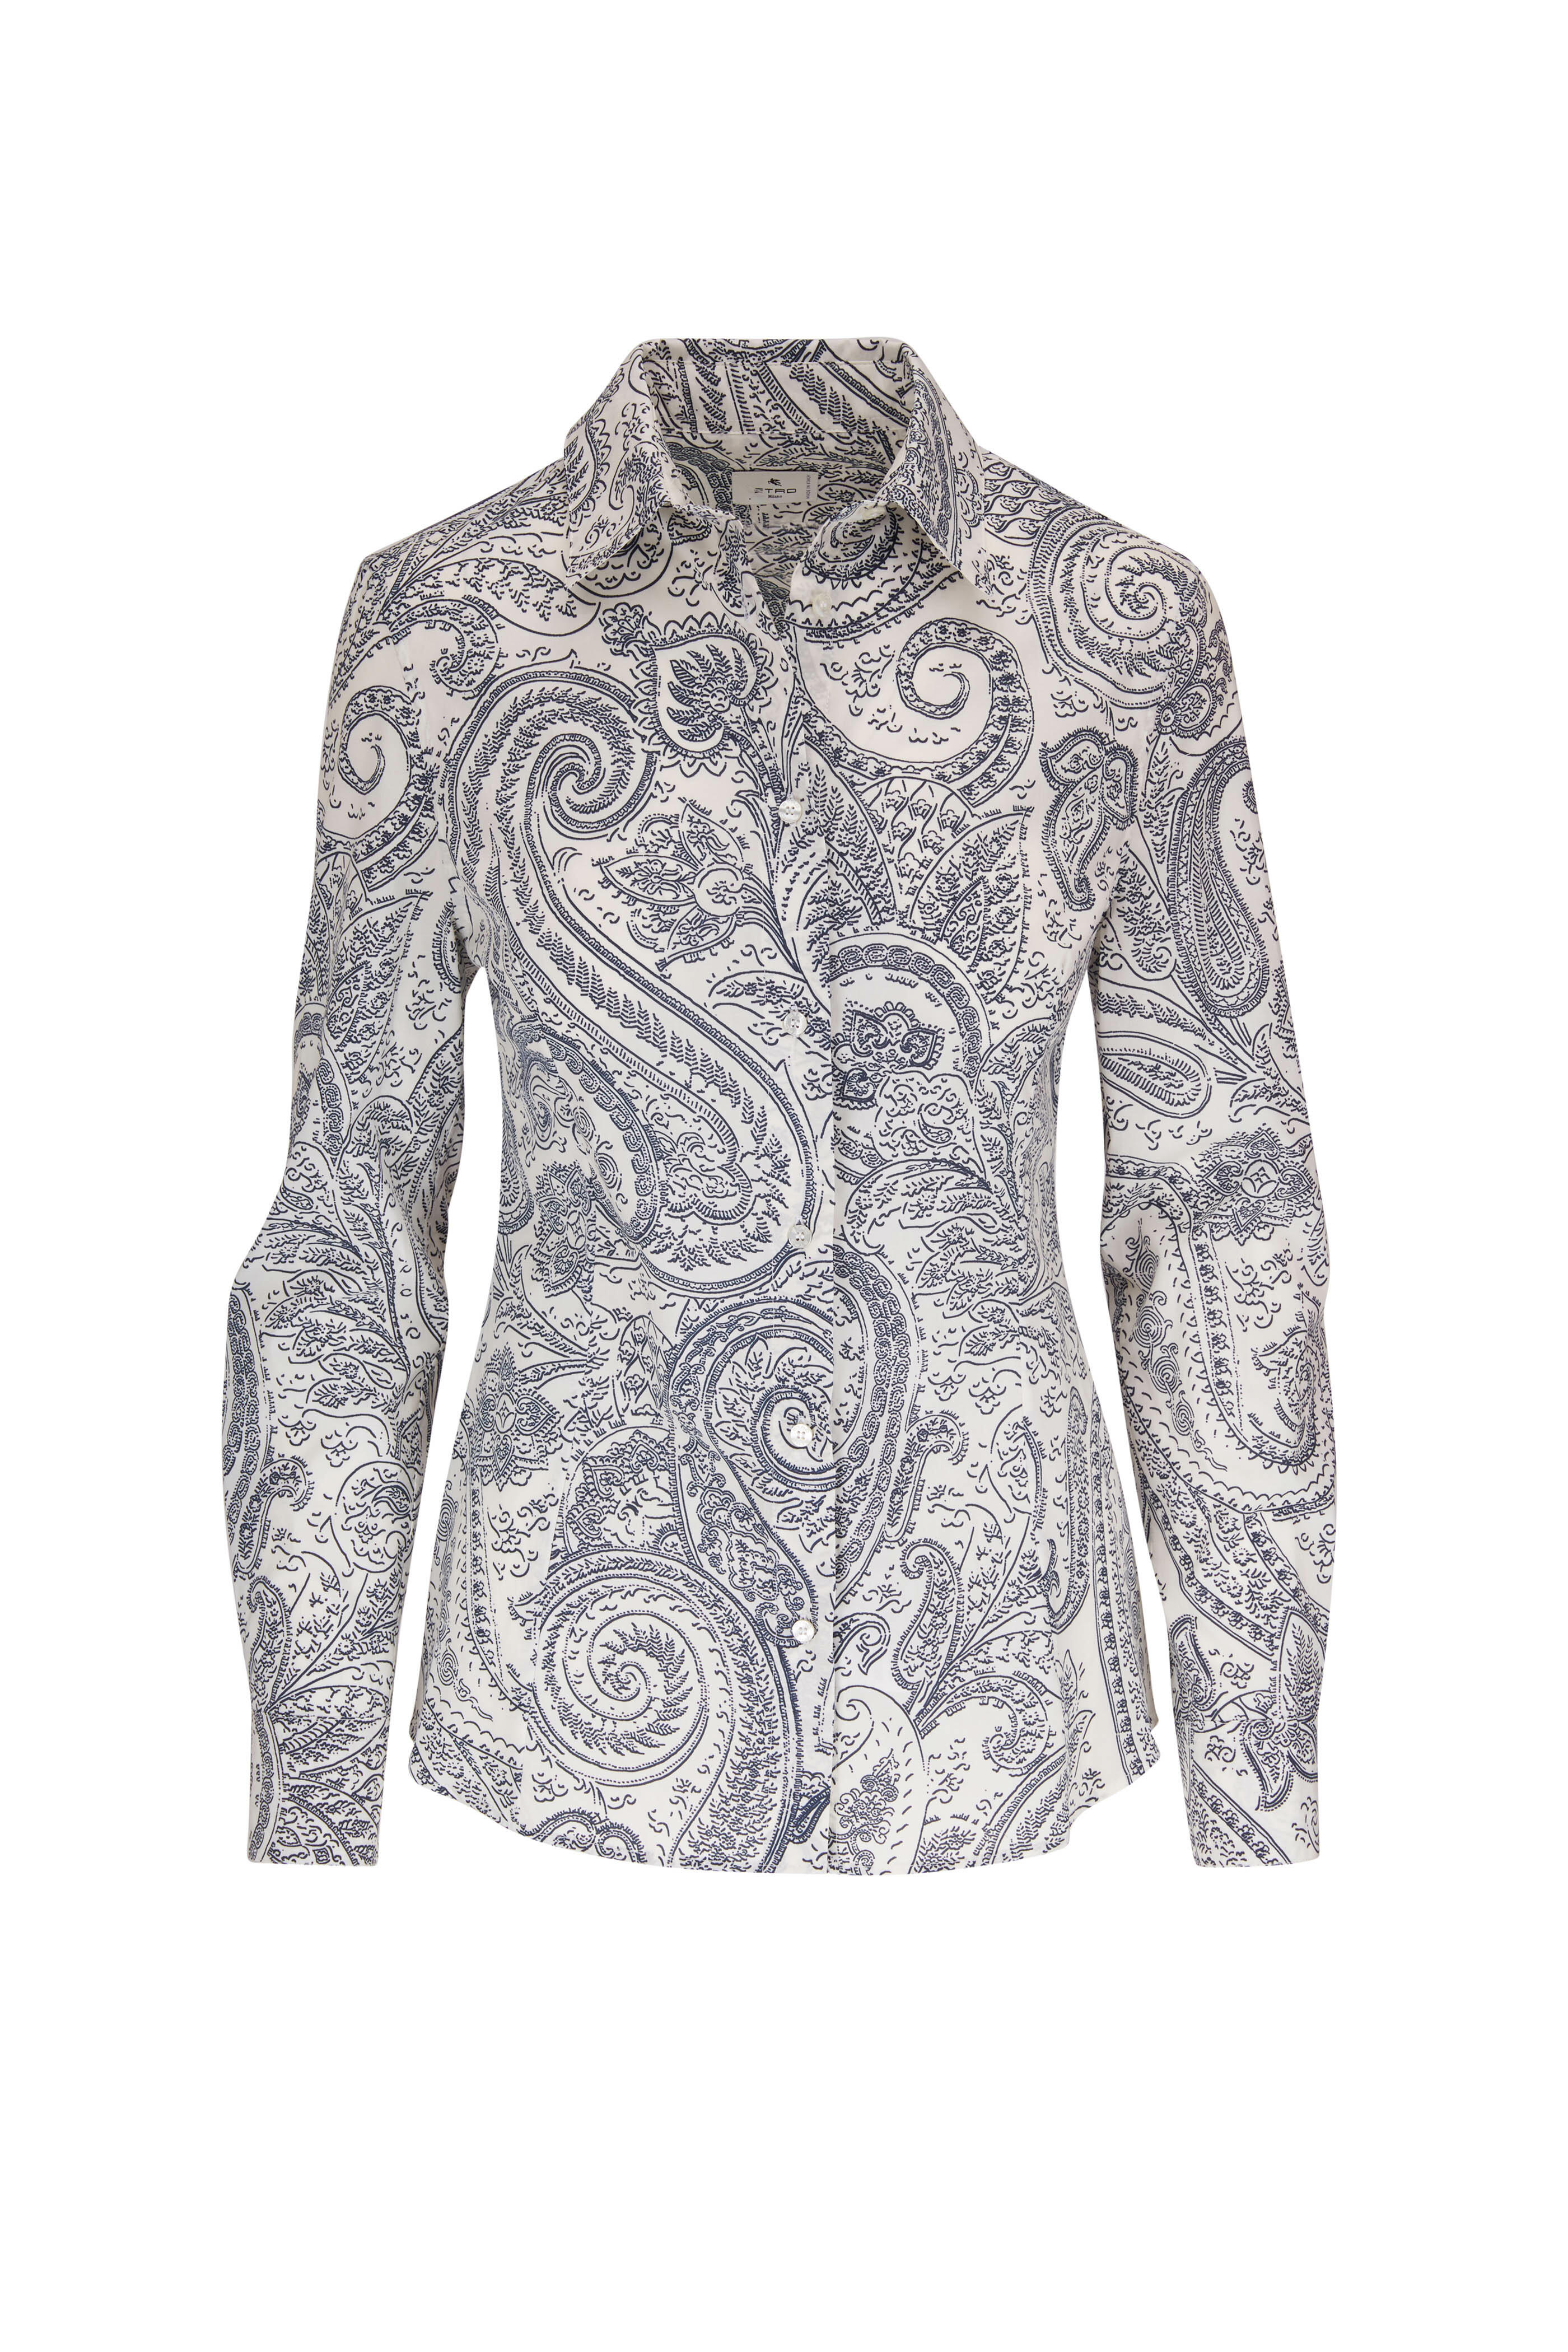 Etro - Lily White Paisley Stretch Cotton Shirt | Mitchell Stores